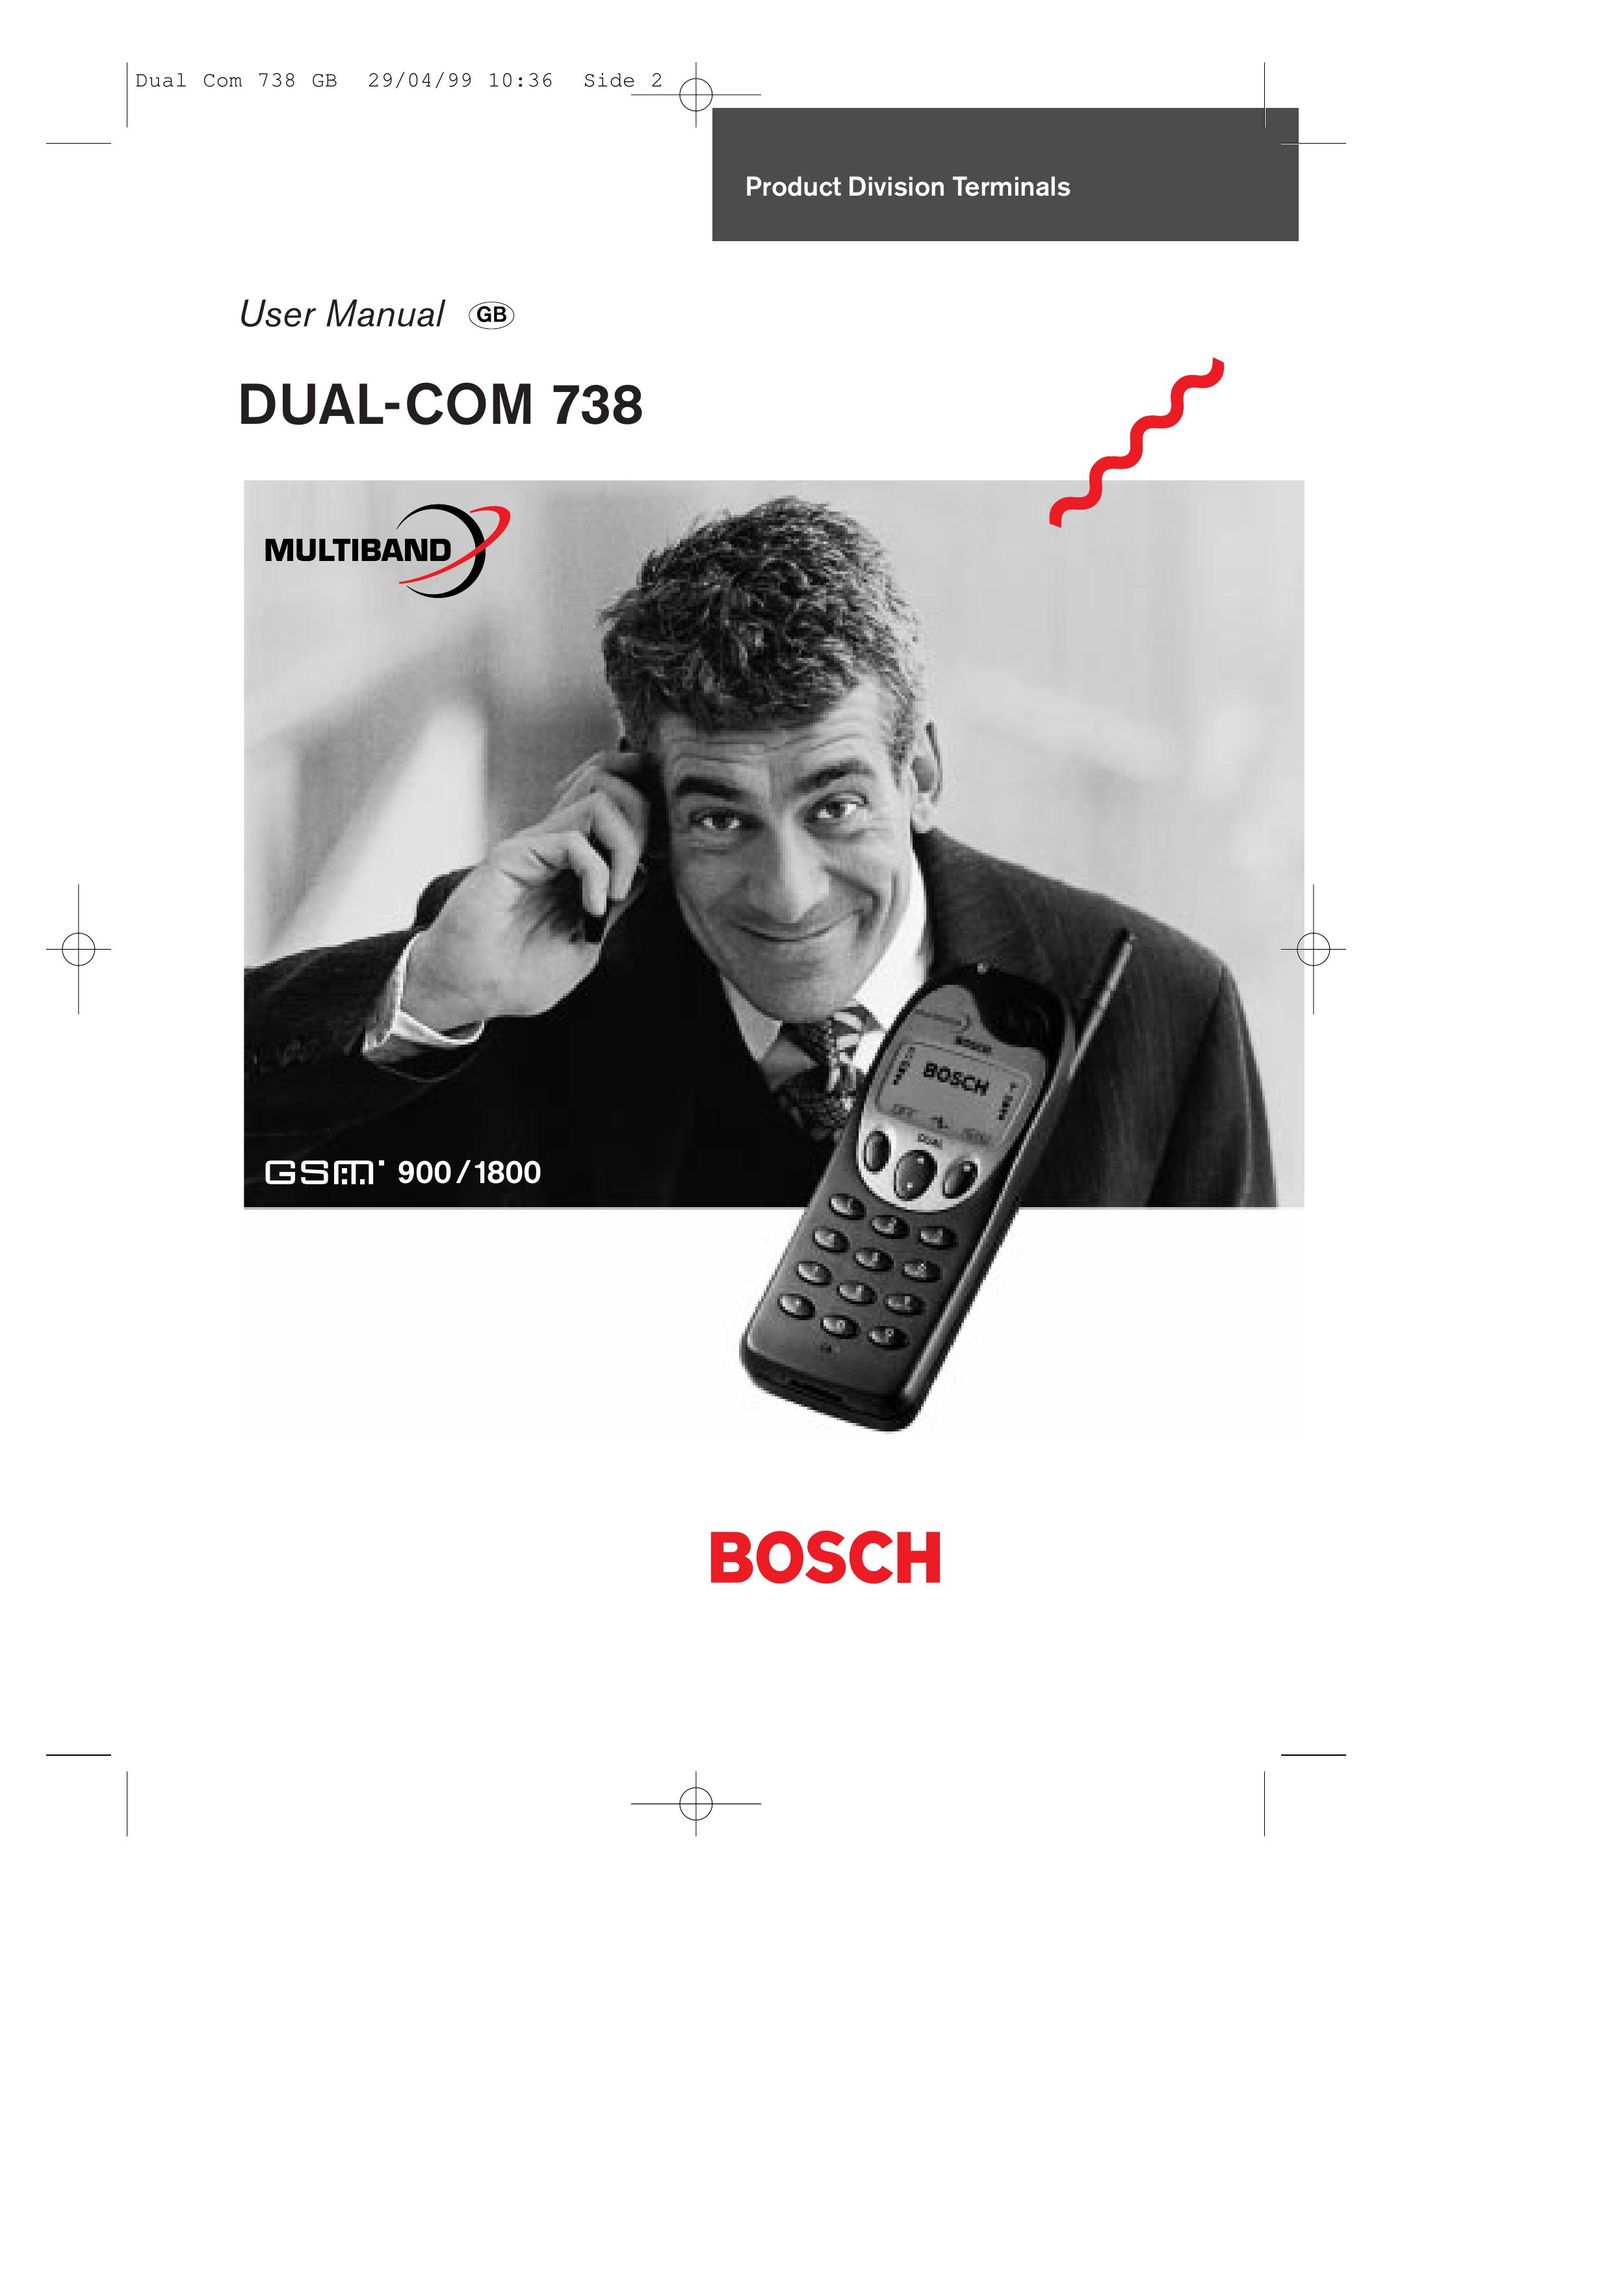 Bosch Appliances QSM 1800 Cell Phone User Manual